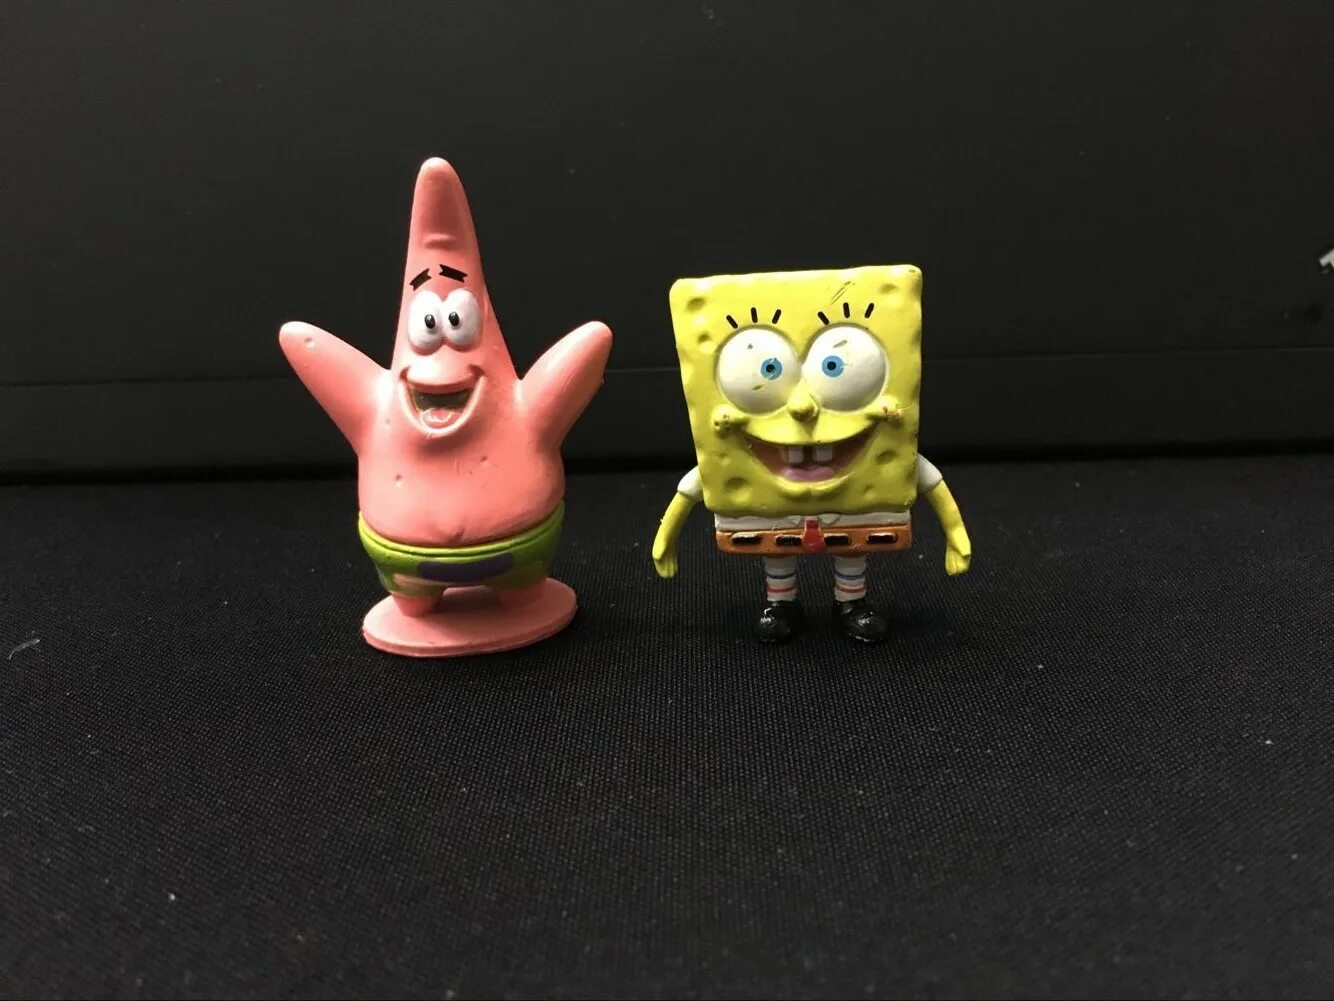 Spongebob pack. Губка Боб фигурки. Игрушки для аквариума губка Боб. Фигурки губка Боб для аквариума. Patrik губка Боб статуэтка.